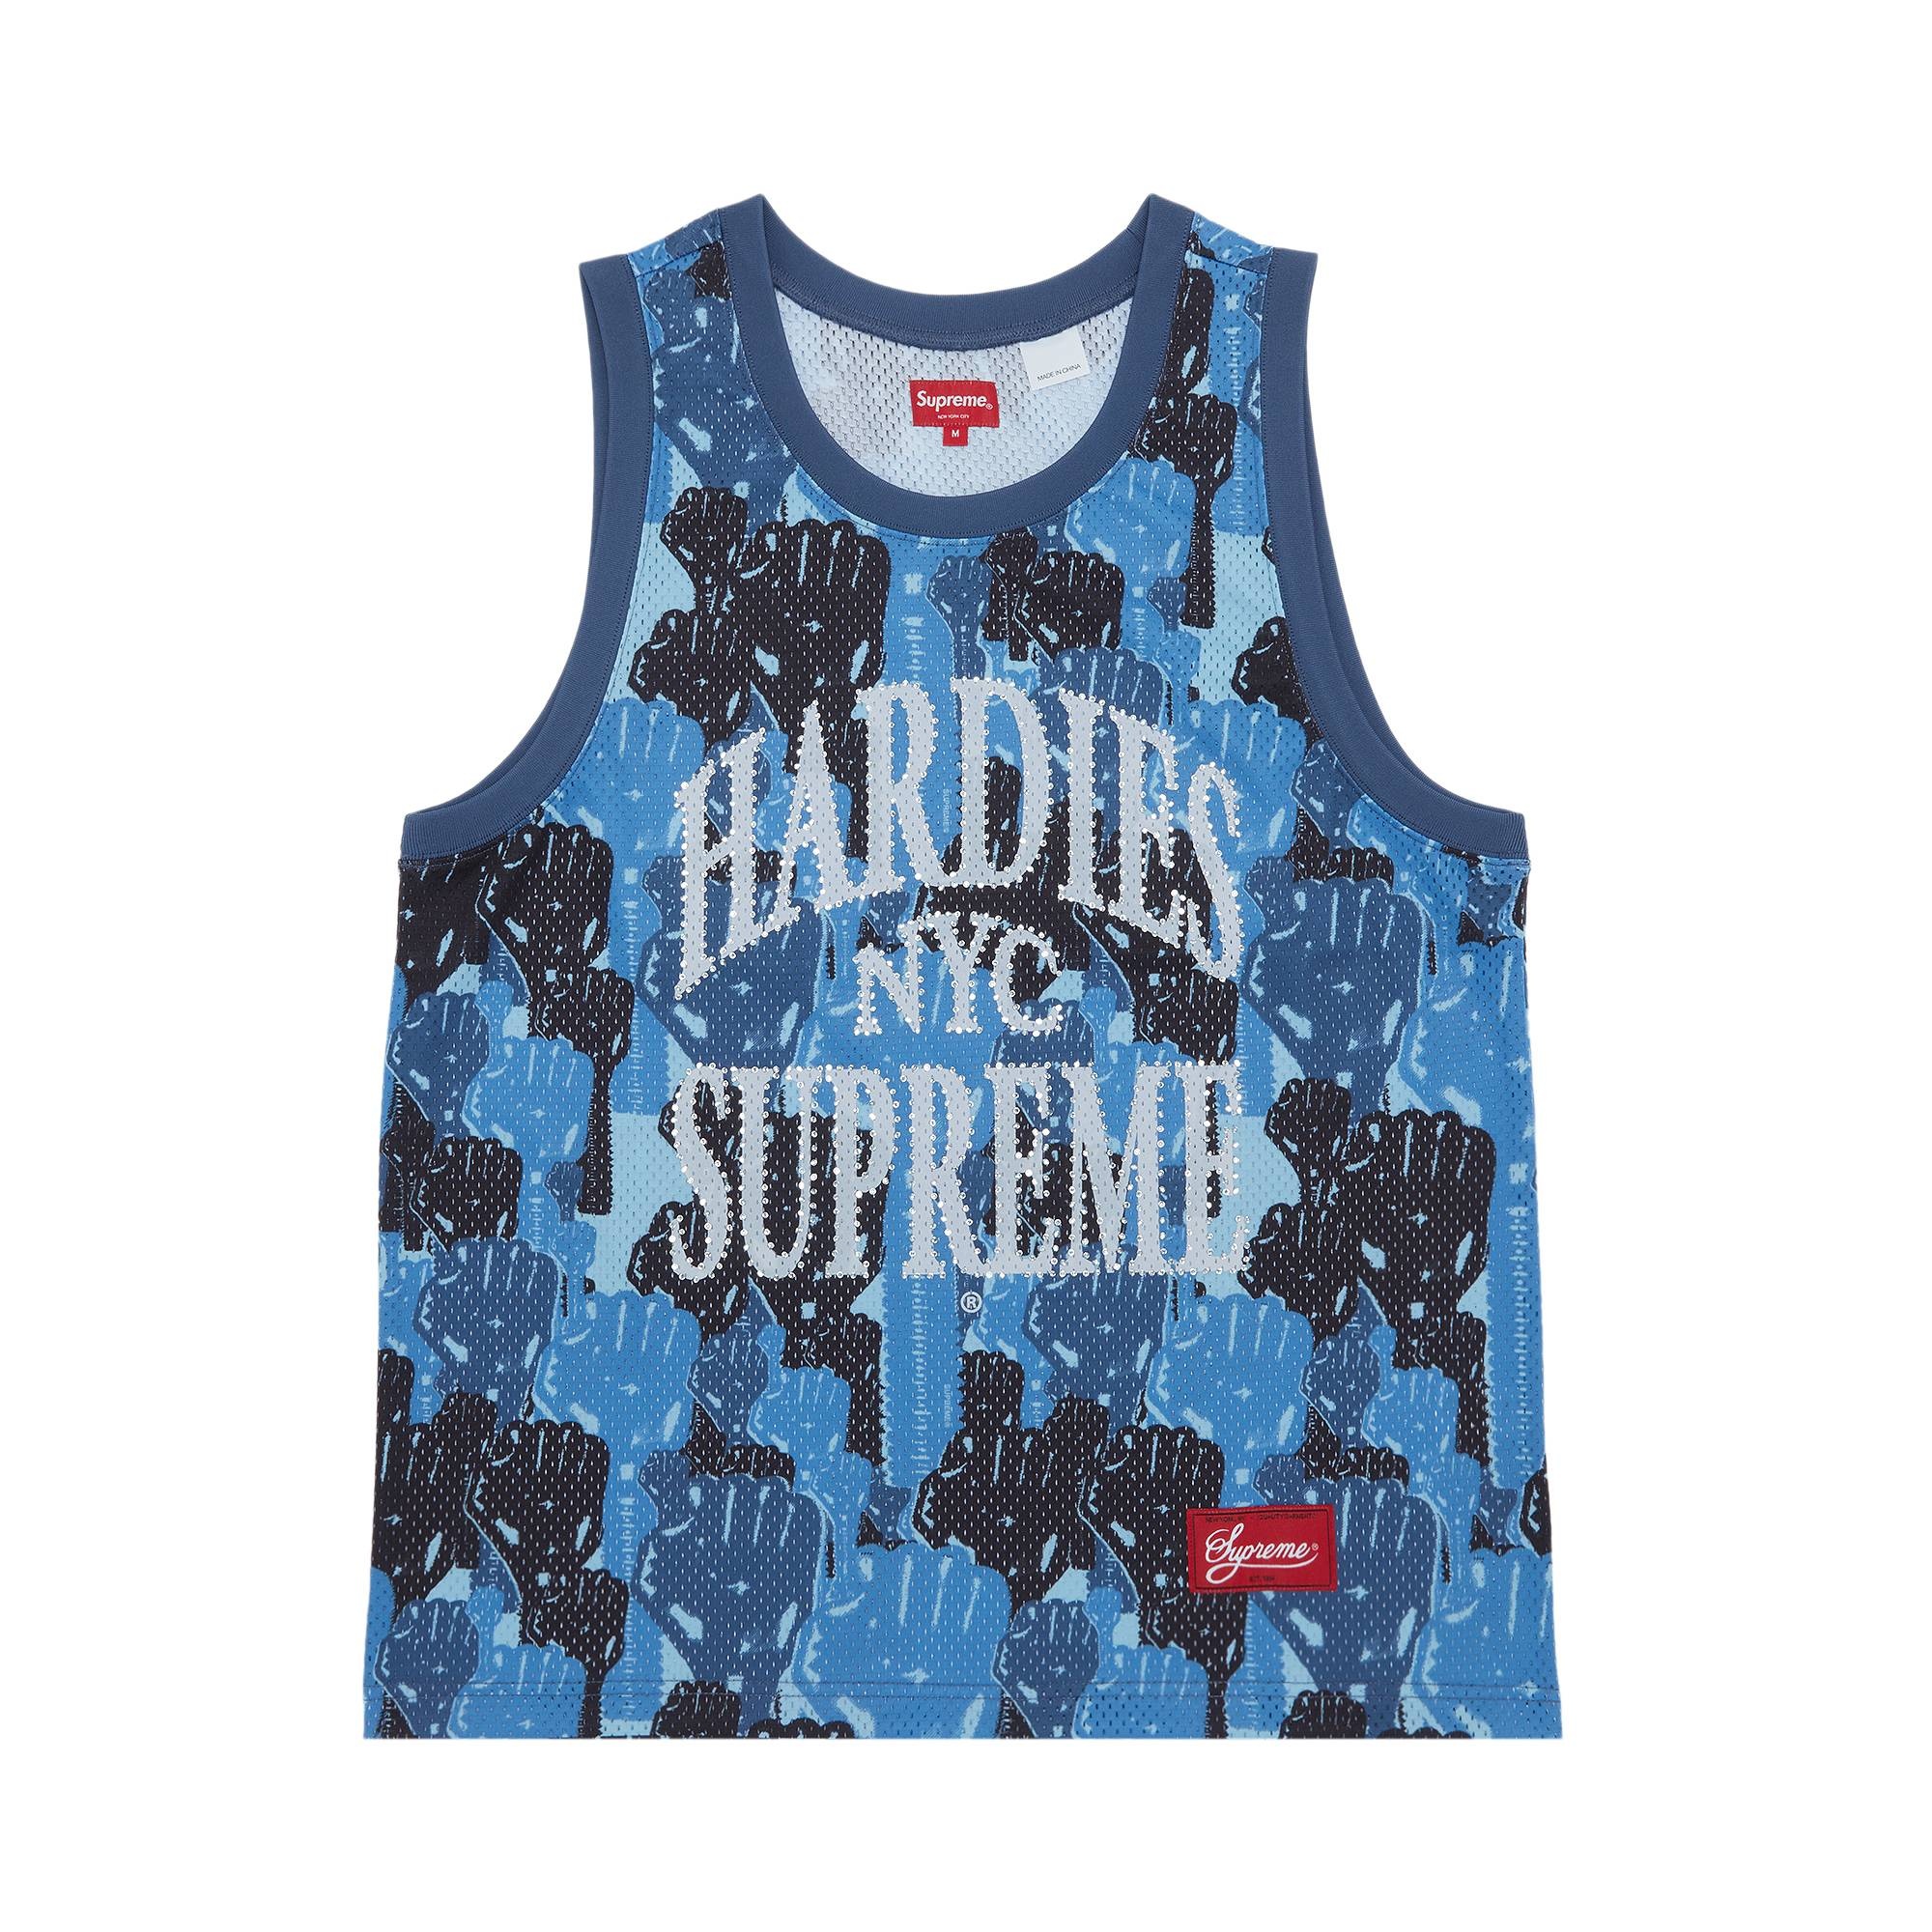 SUPREME Authentic Hardies Camo Basketball Jersey Tank Top Sleeveless size  40 US